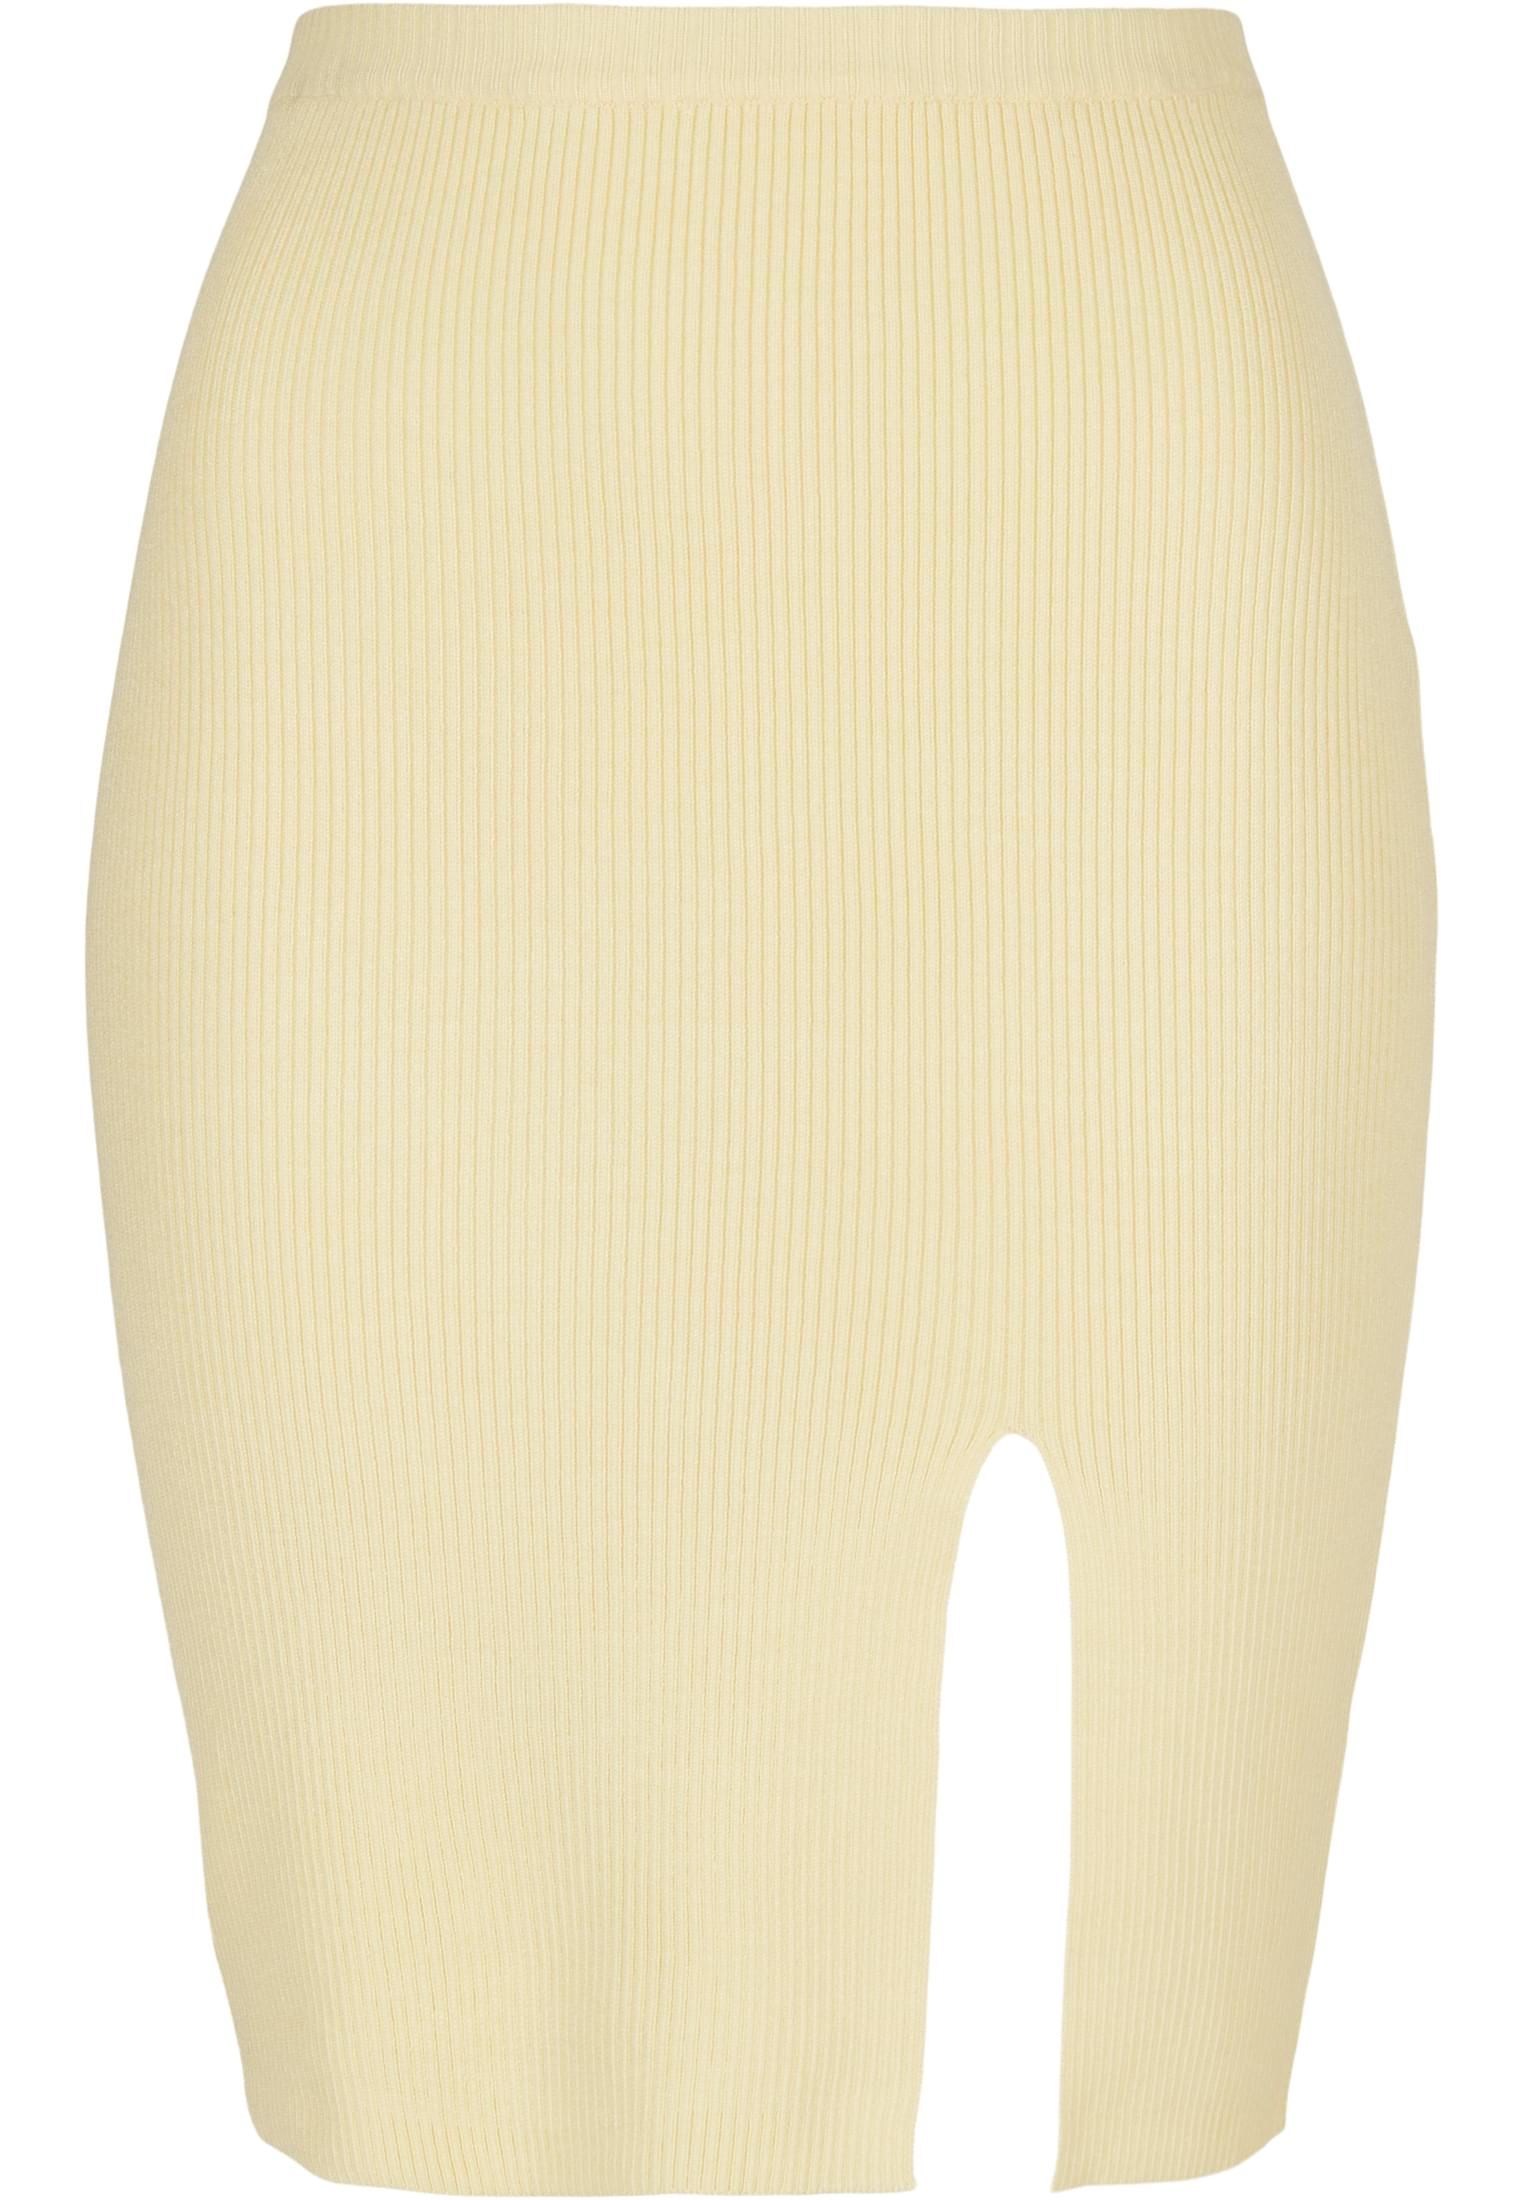 Kleider & R?cke Ladies Rib Knit Skirt in Farbe softyellow